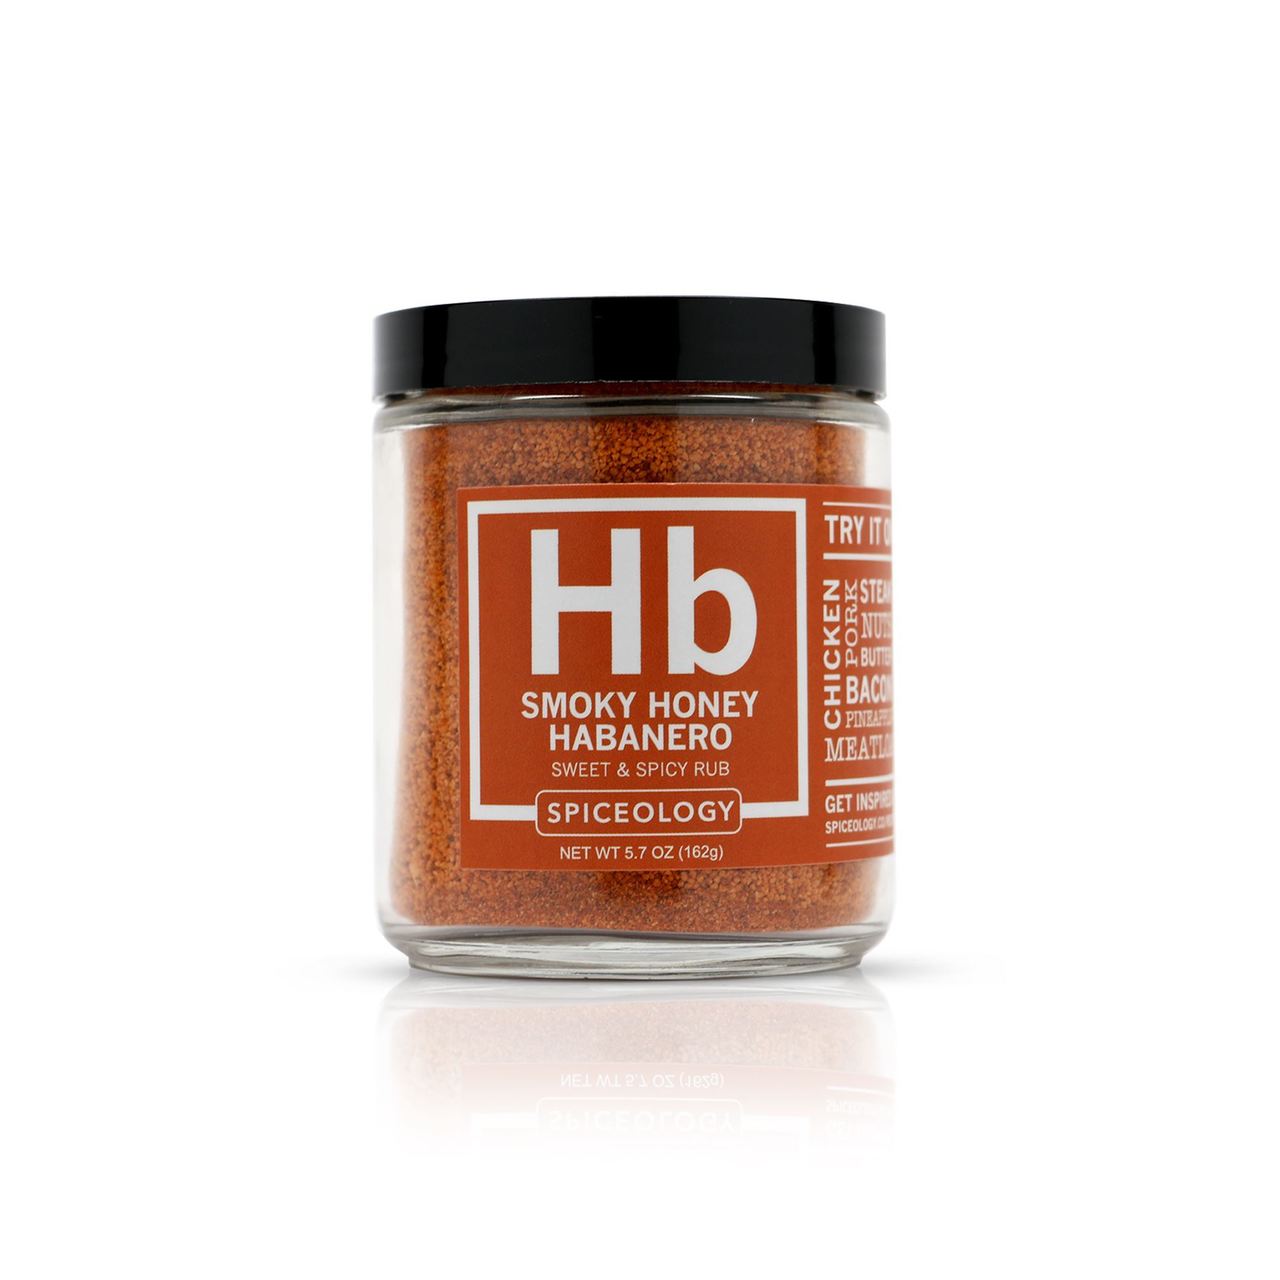 Spiced Honey Ham Rub Spice Blend Recipe